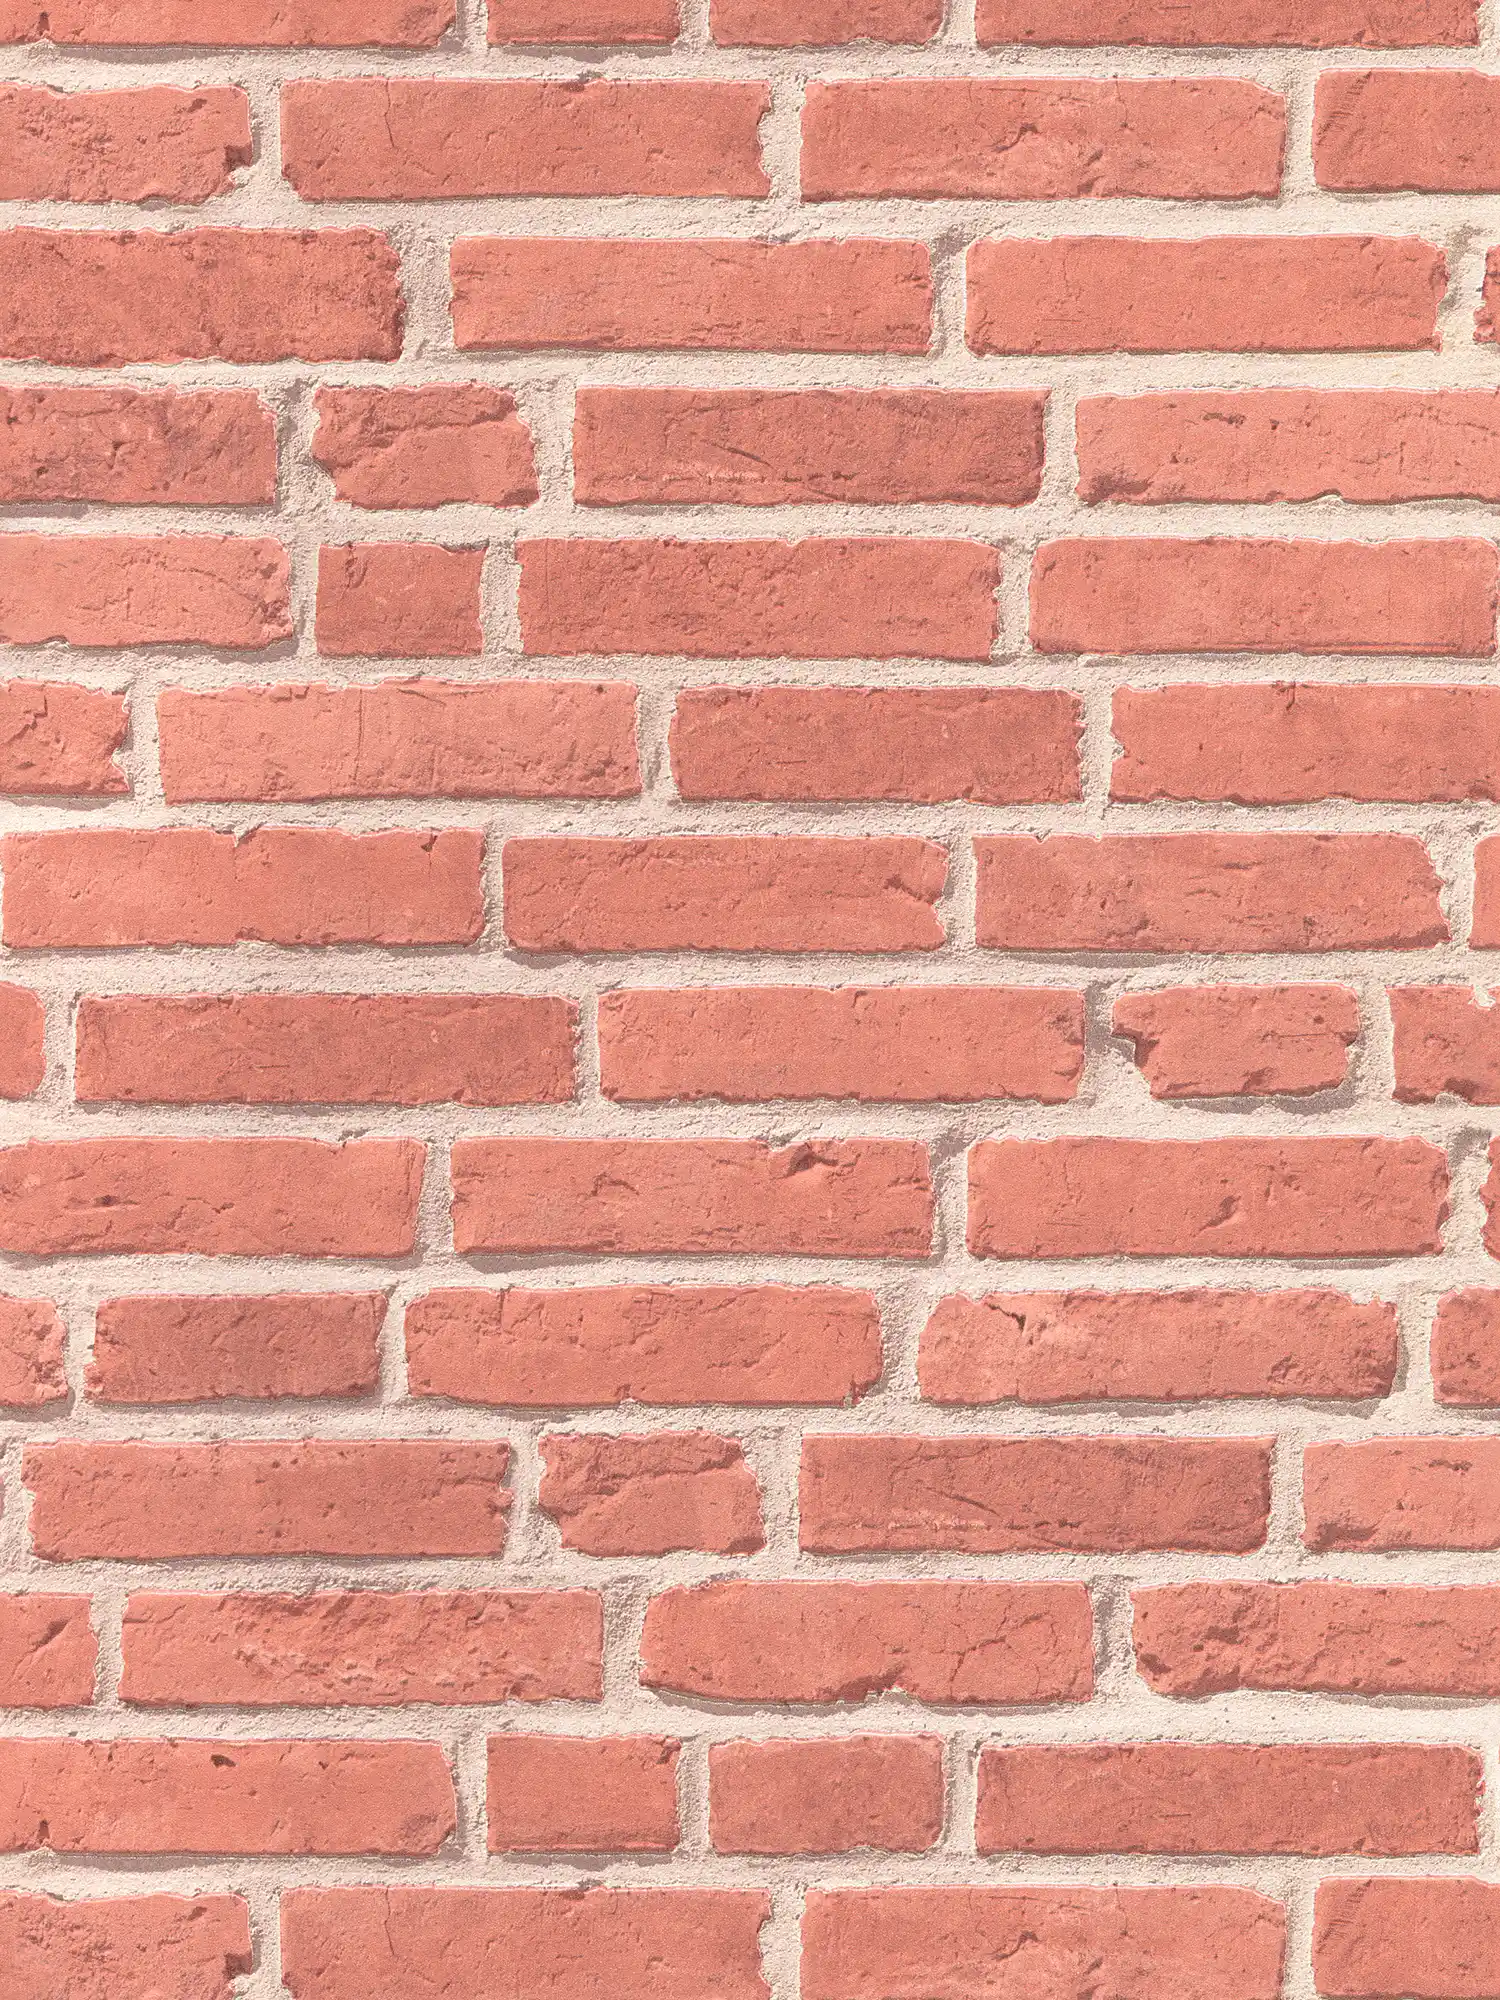 Wallpaper with bricks in clinker look - red, beige
